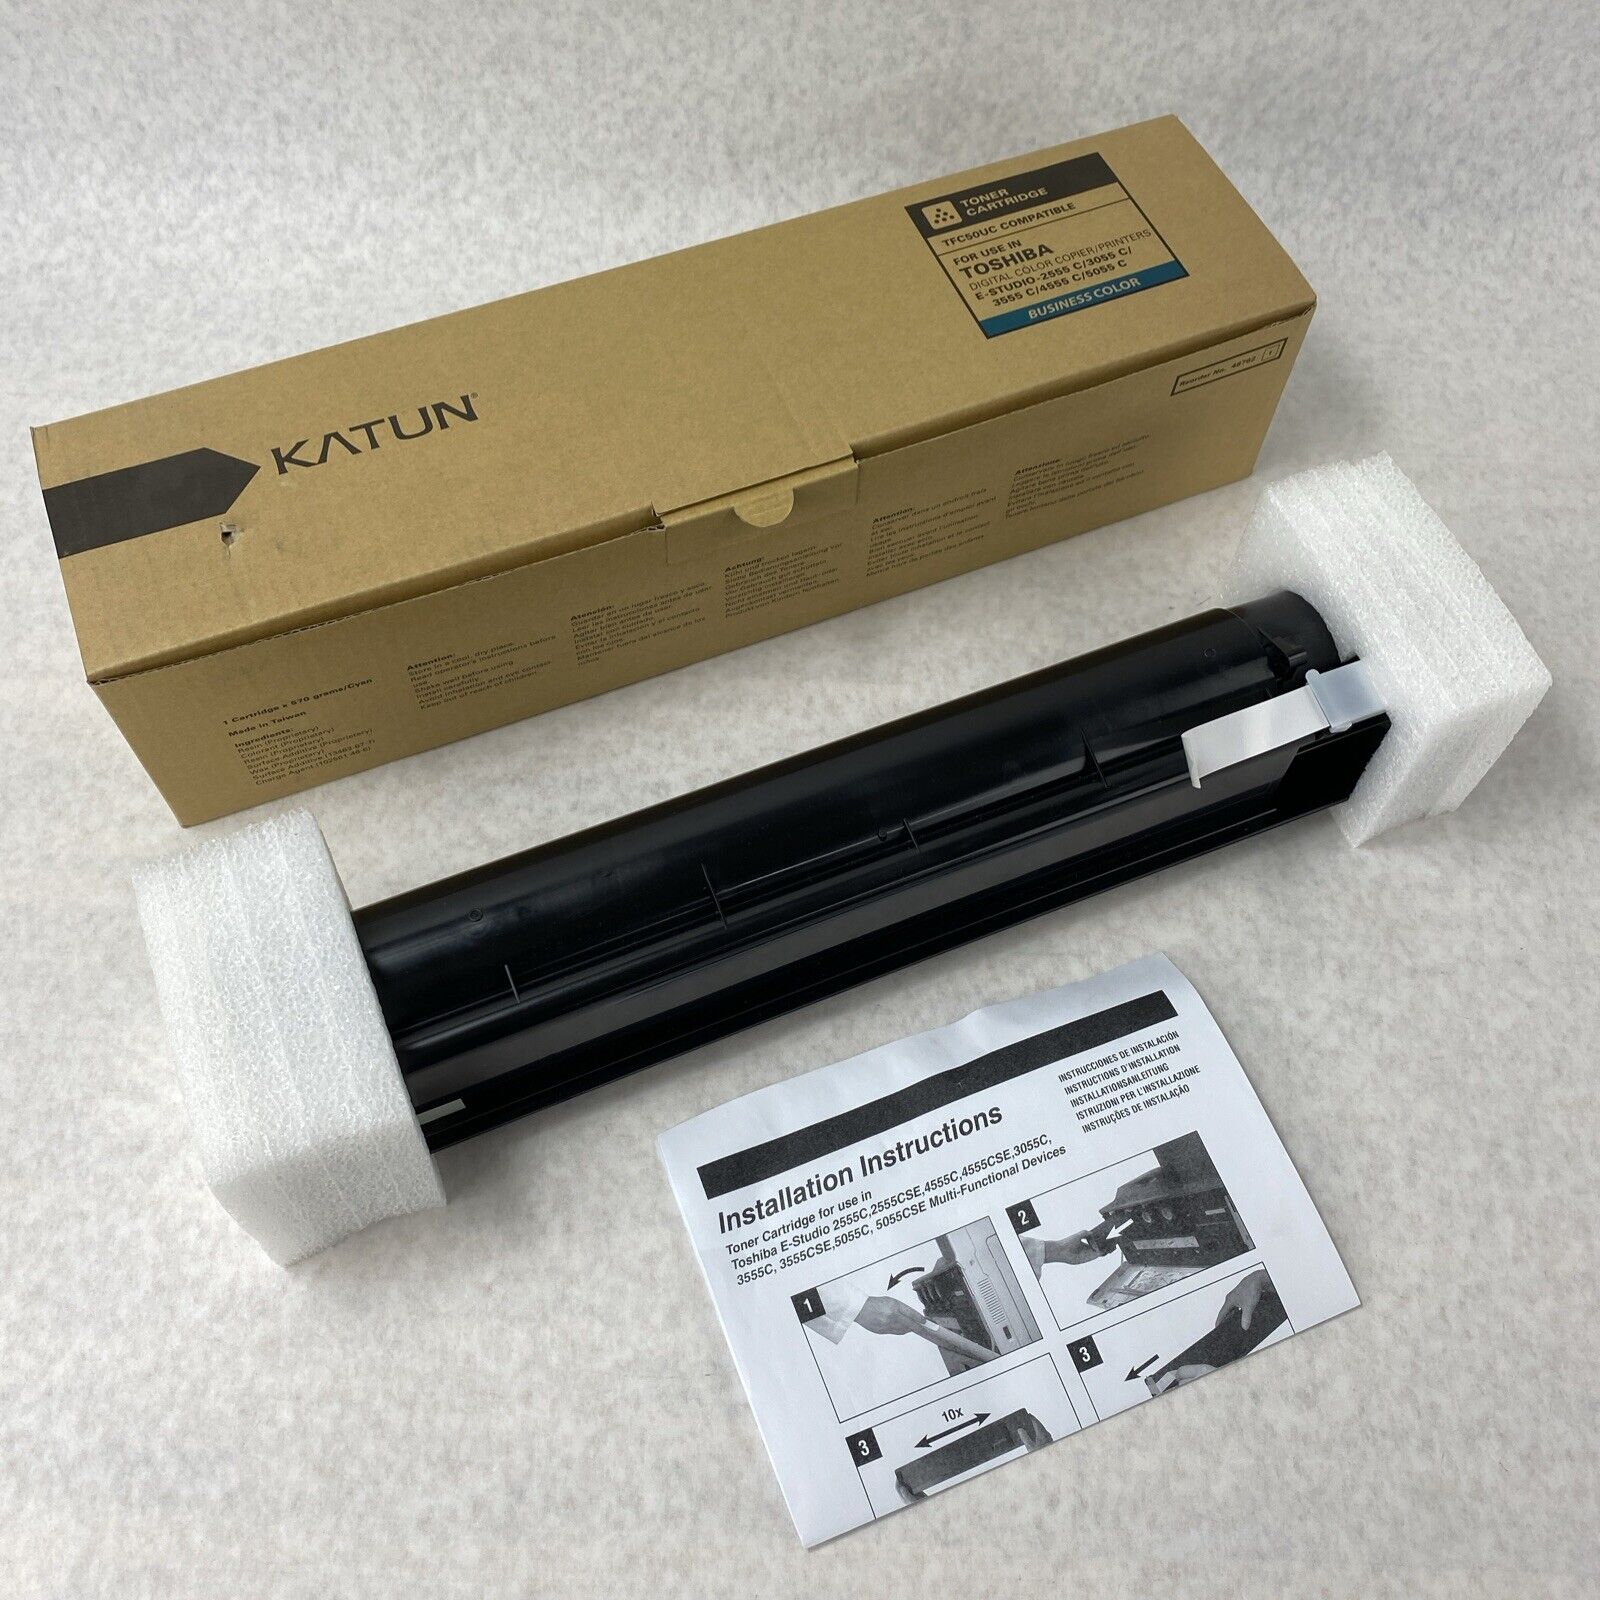 Katun TFC50UC Compatible Cyan Toner Cartridge For Toshiba Color Copier/ Printers